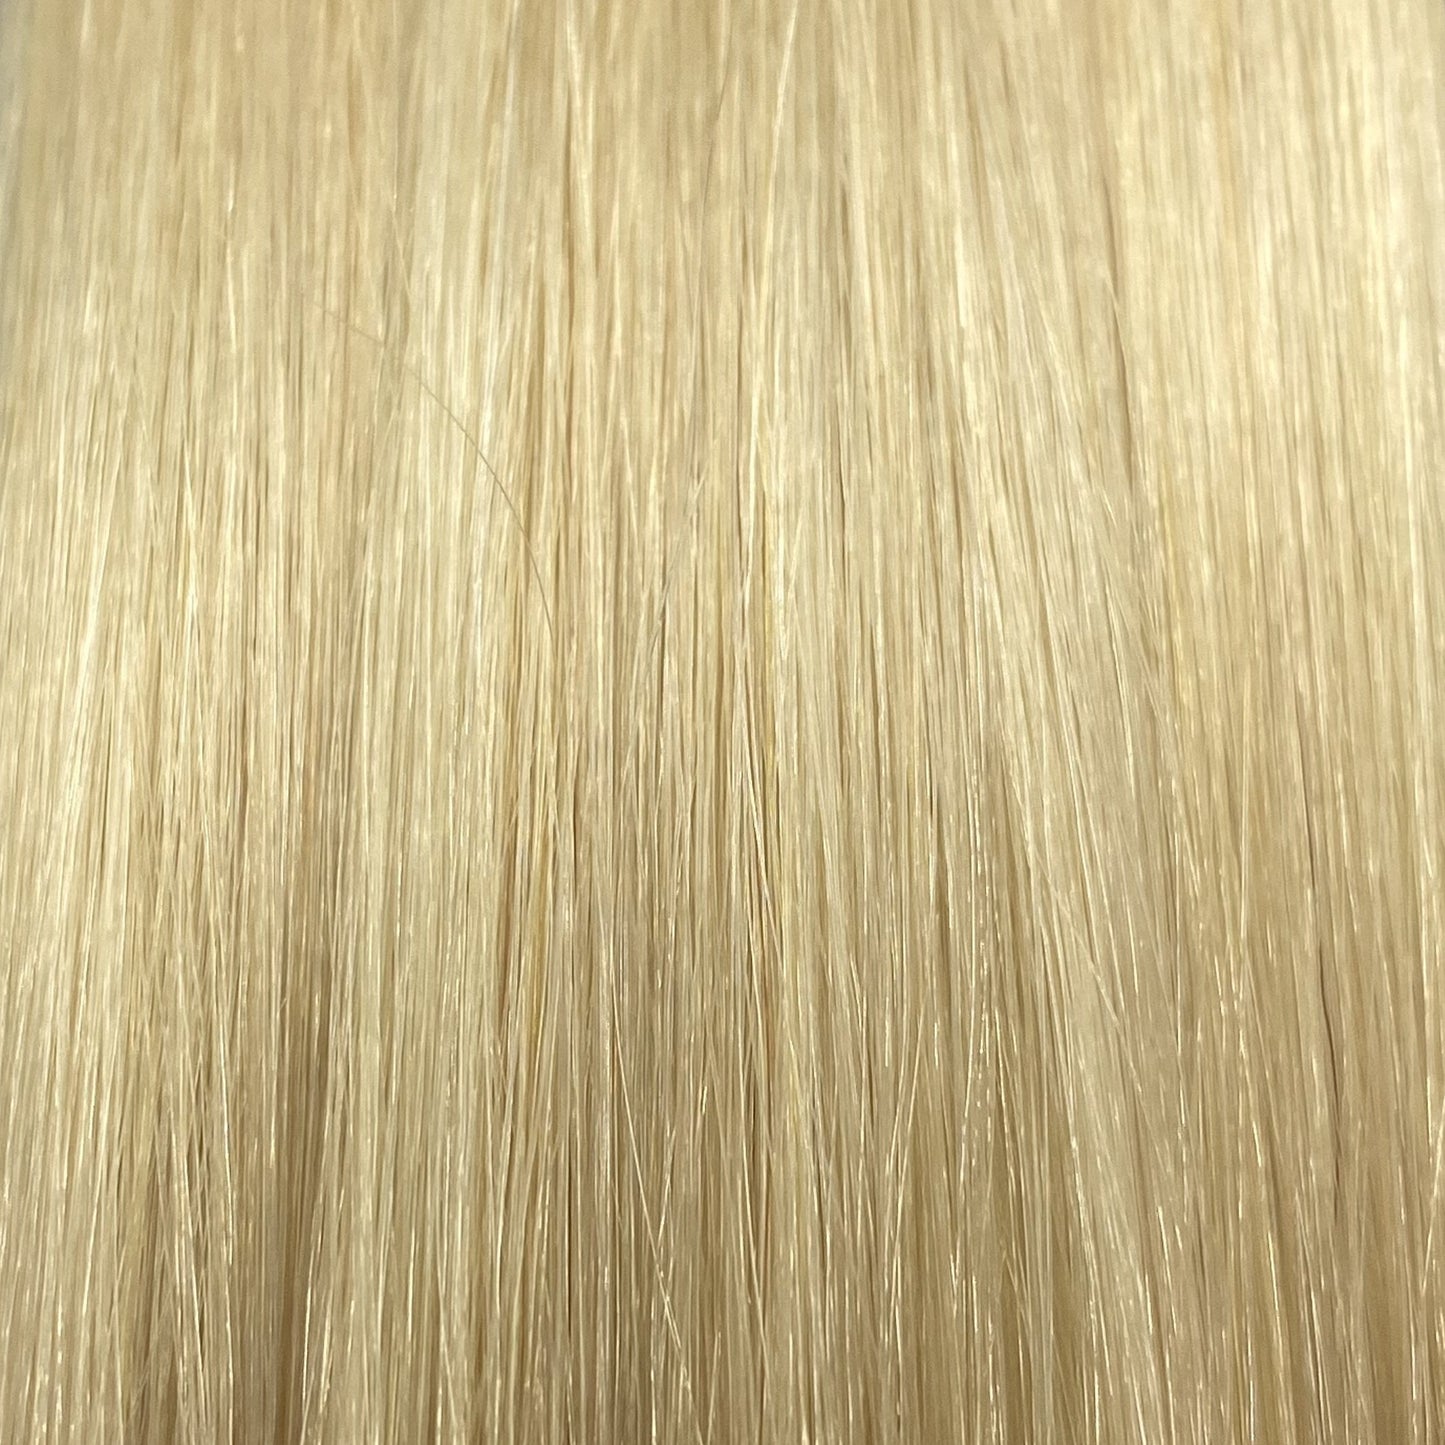 Fusion hair extensions #1003 - 40cm/16 inches - Scandinavian Blonde Fusion Euro So Cap 